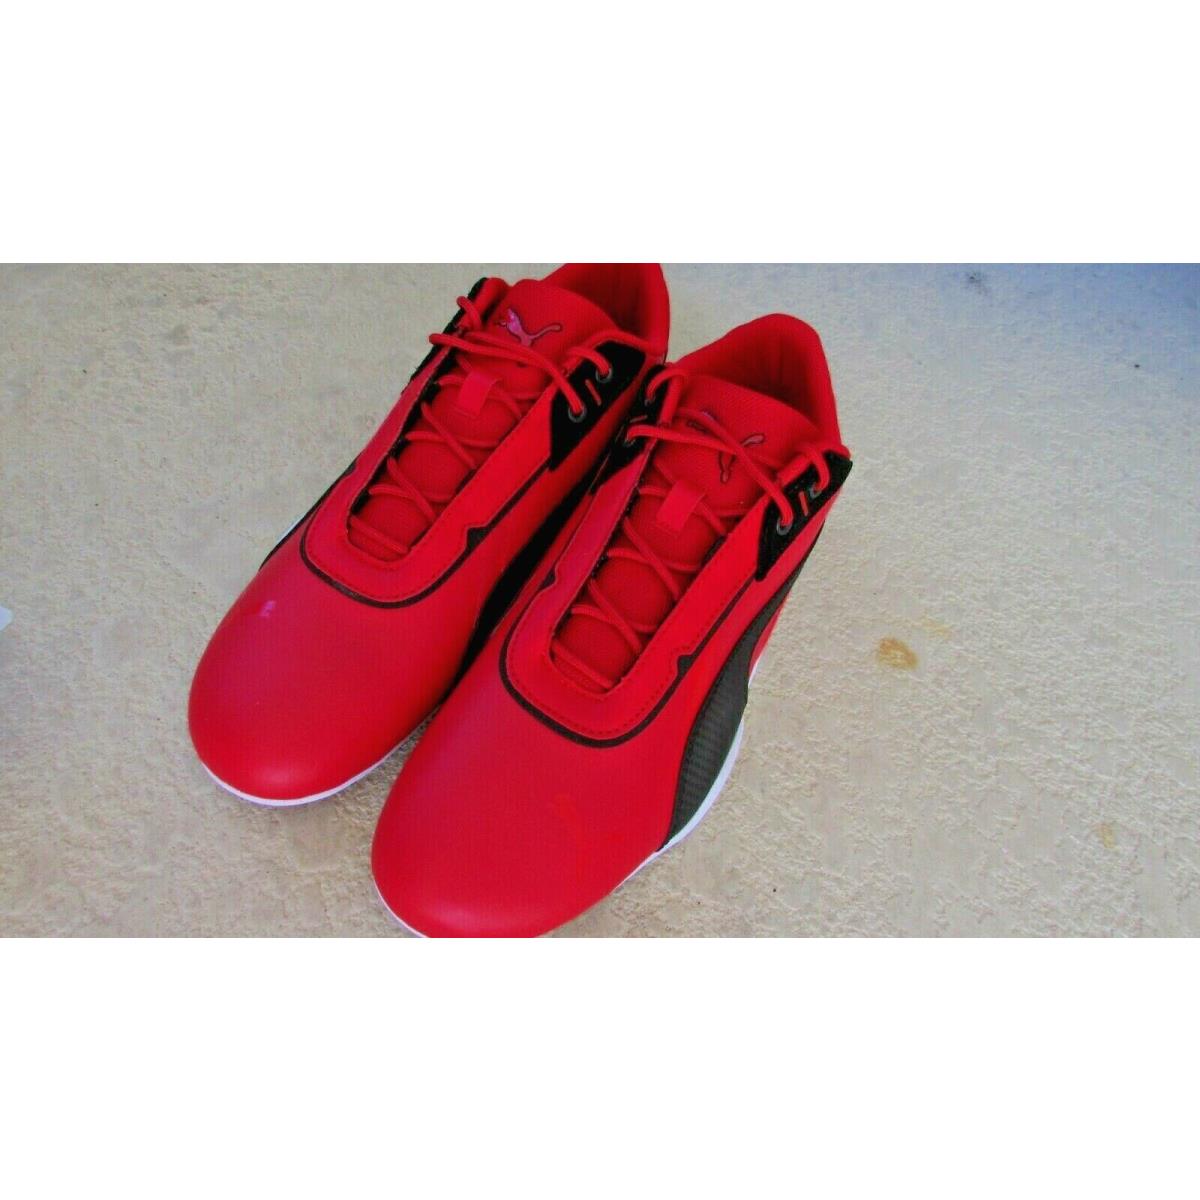 Puma shoes Driving Auto shoe - Ferrari Red 1